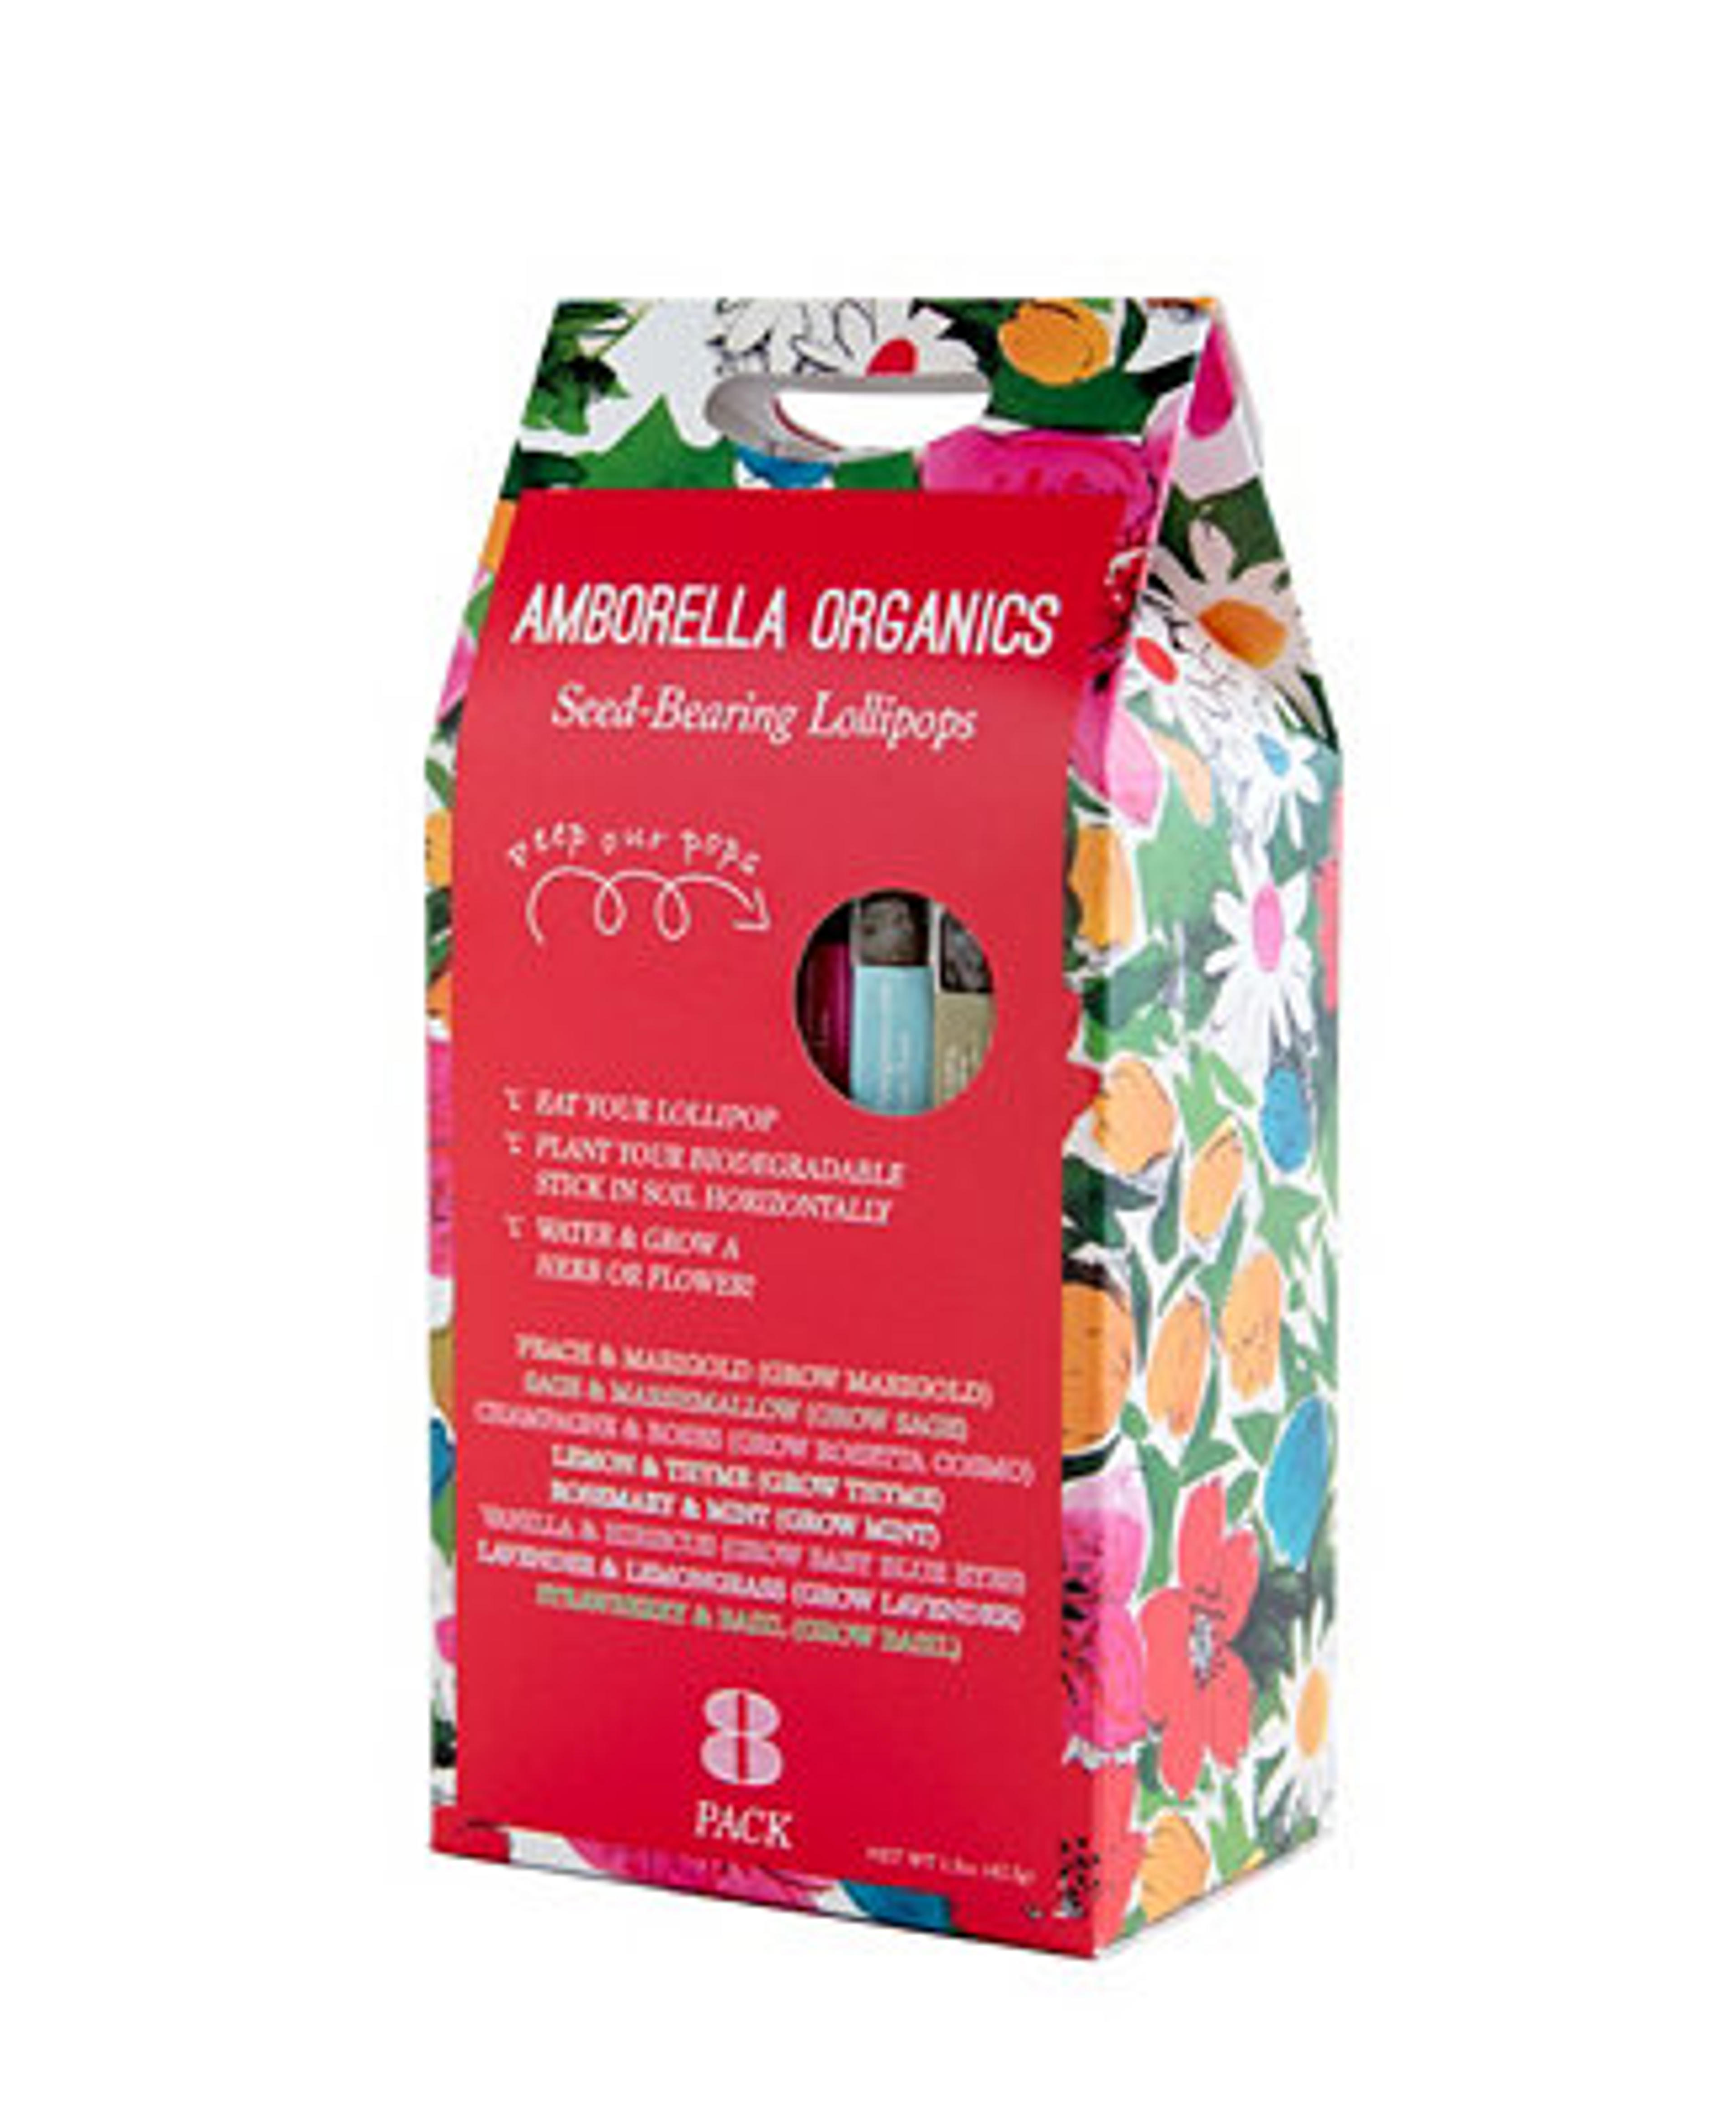 Amborella Organics Garden Lover’s Lollipops, 8 Seed-Bearing Lollipops & Reviews - Food & Gourmet Gifts - Dining - Macy's